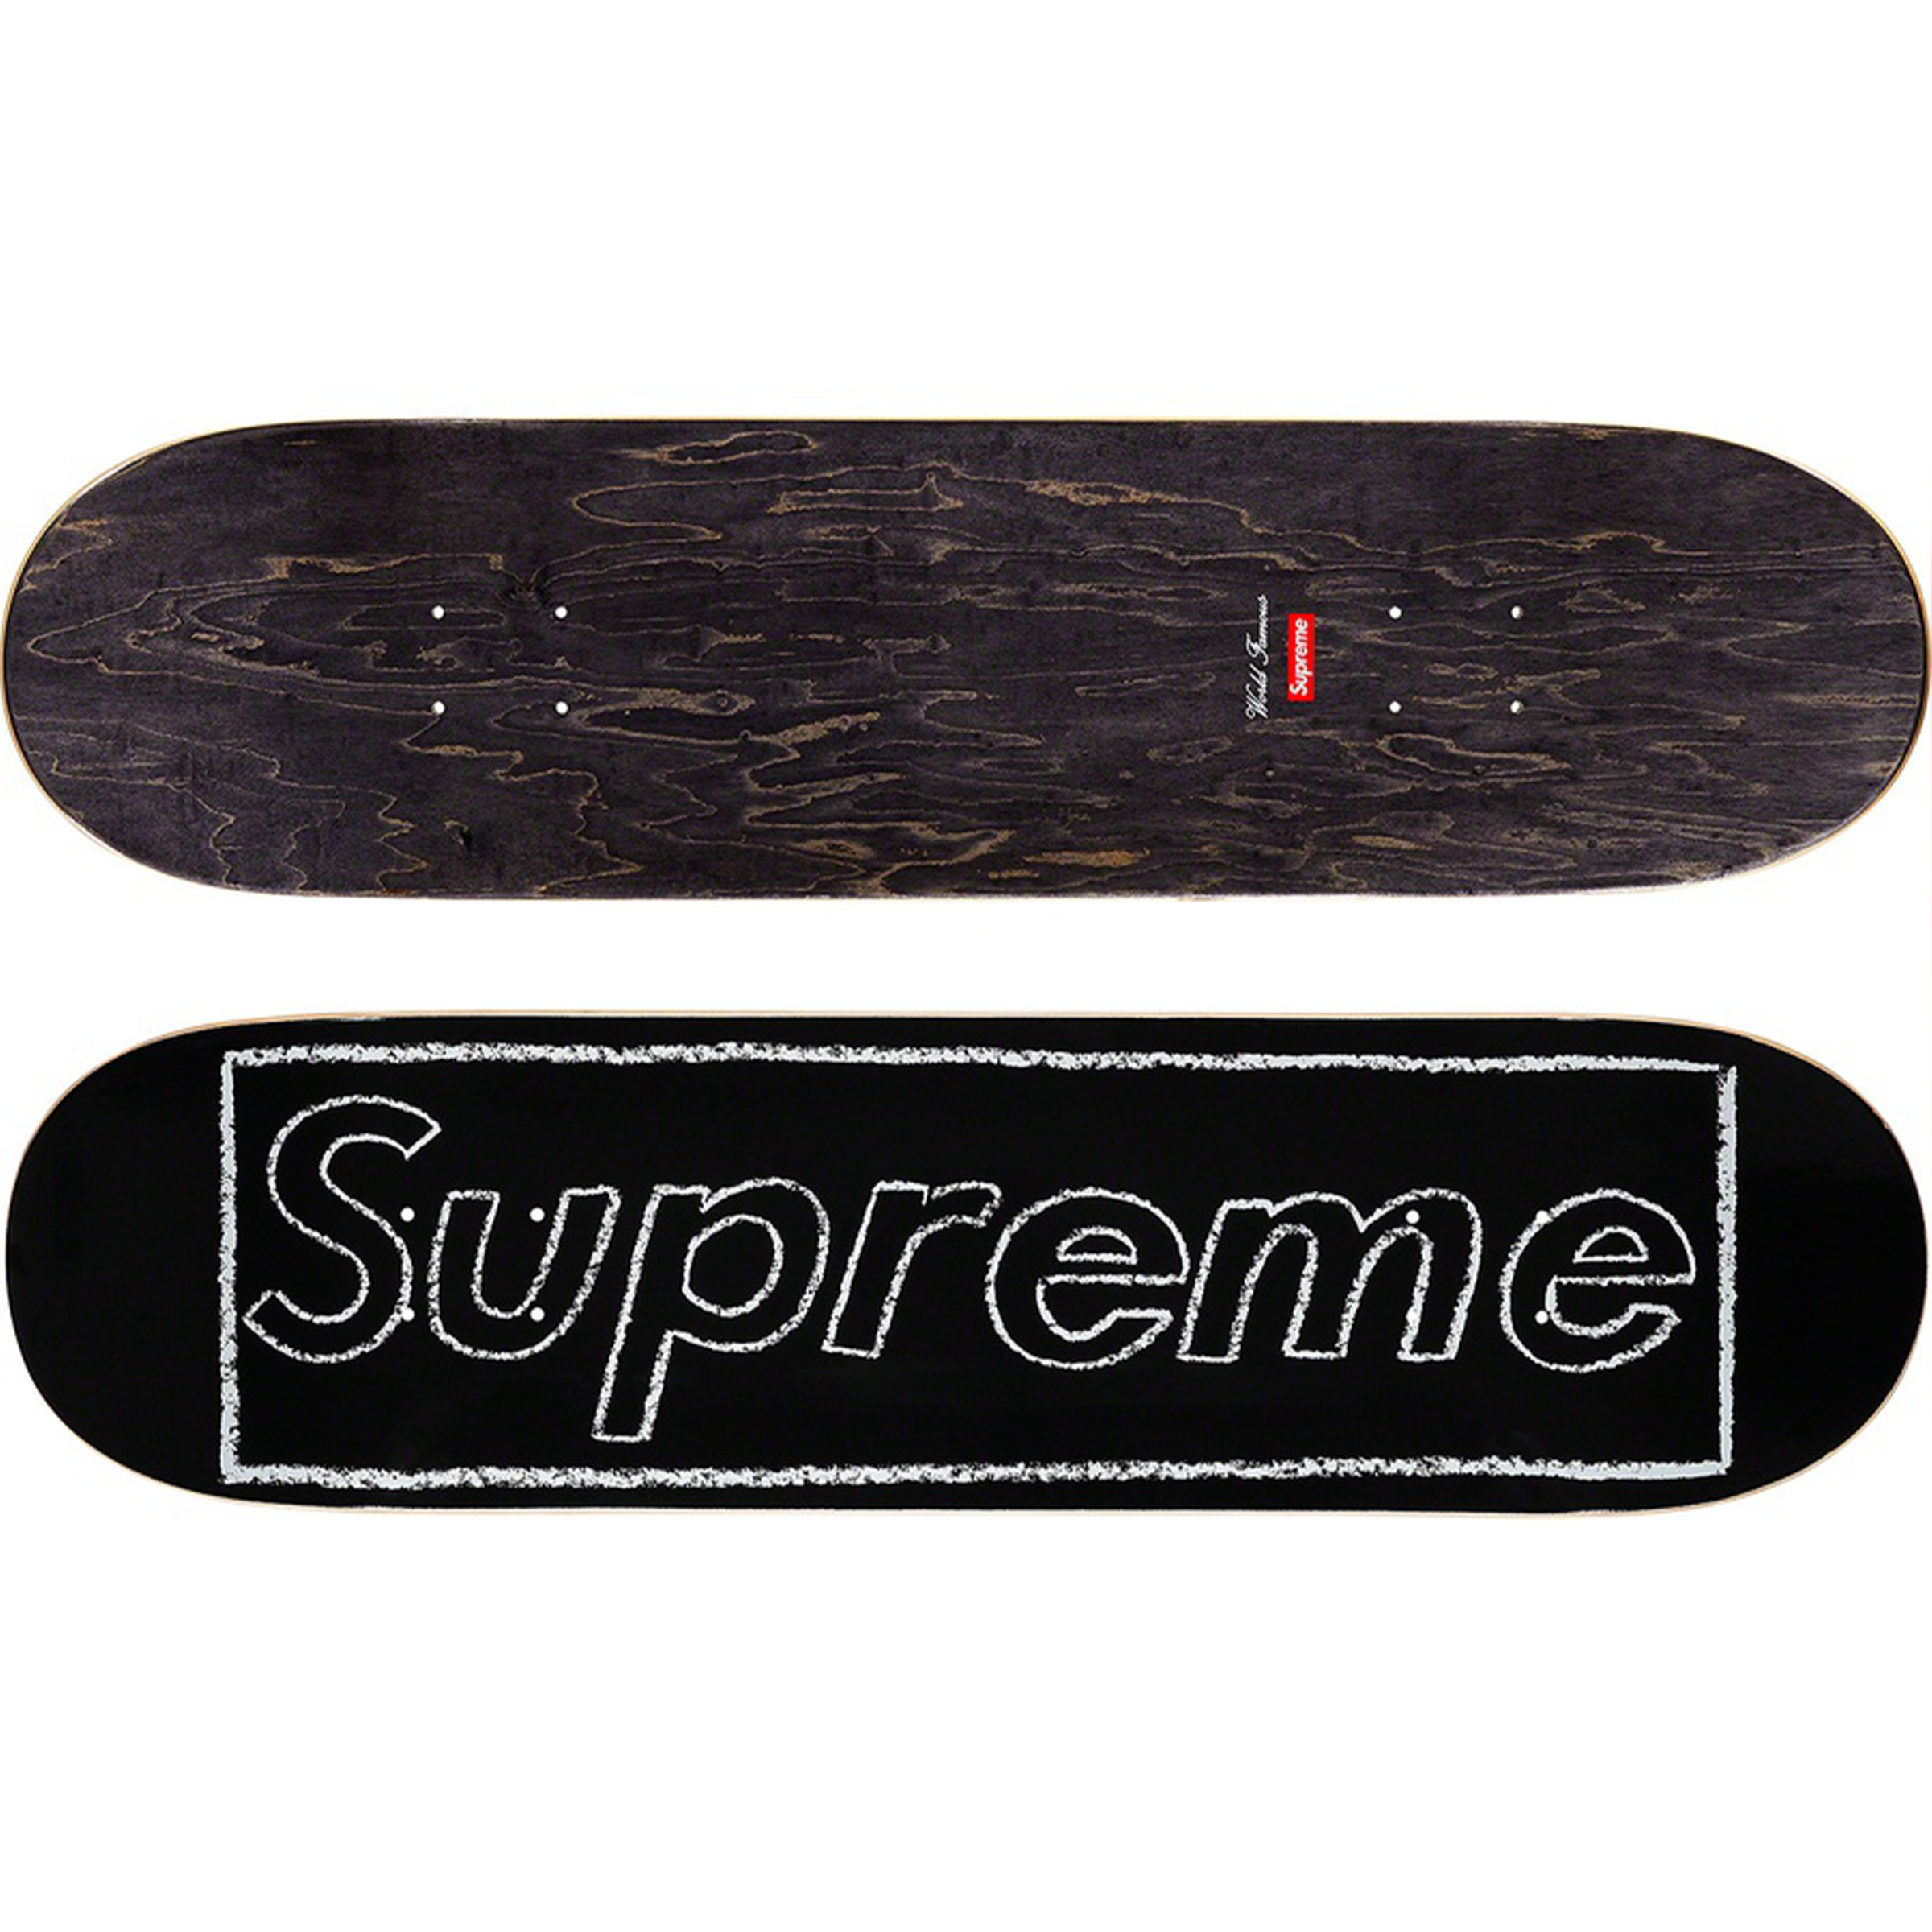 Supreme "Box Logo" Skateboard